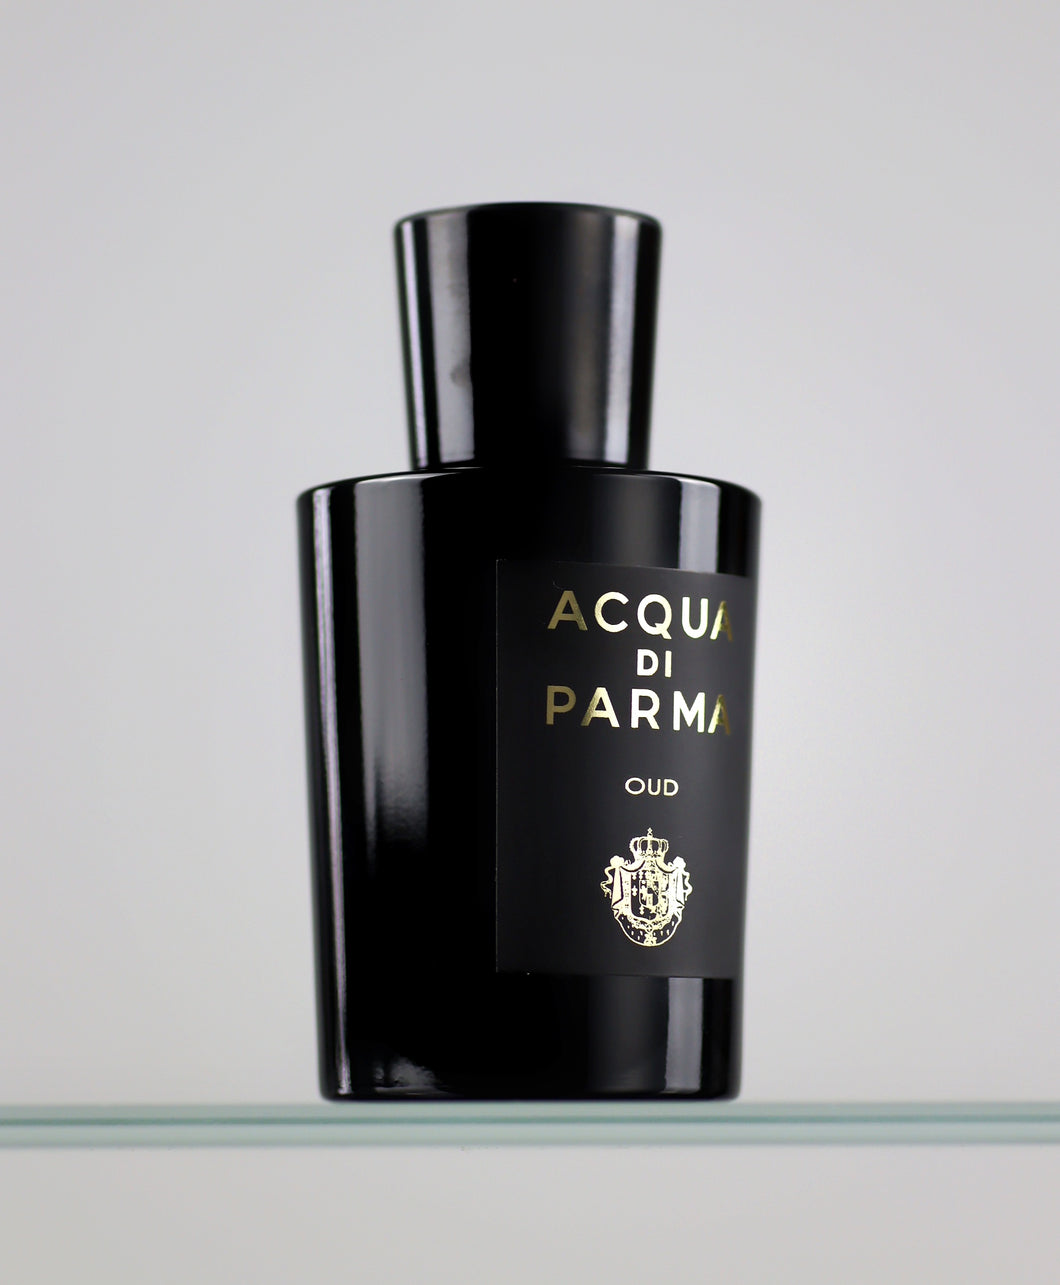 perfume shazam! on X: Acqua Di Parma oud and Acqua Di Parma